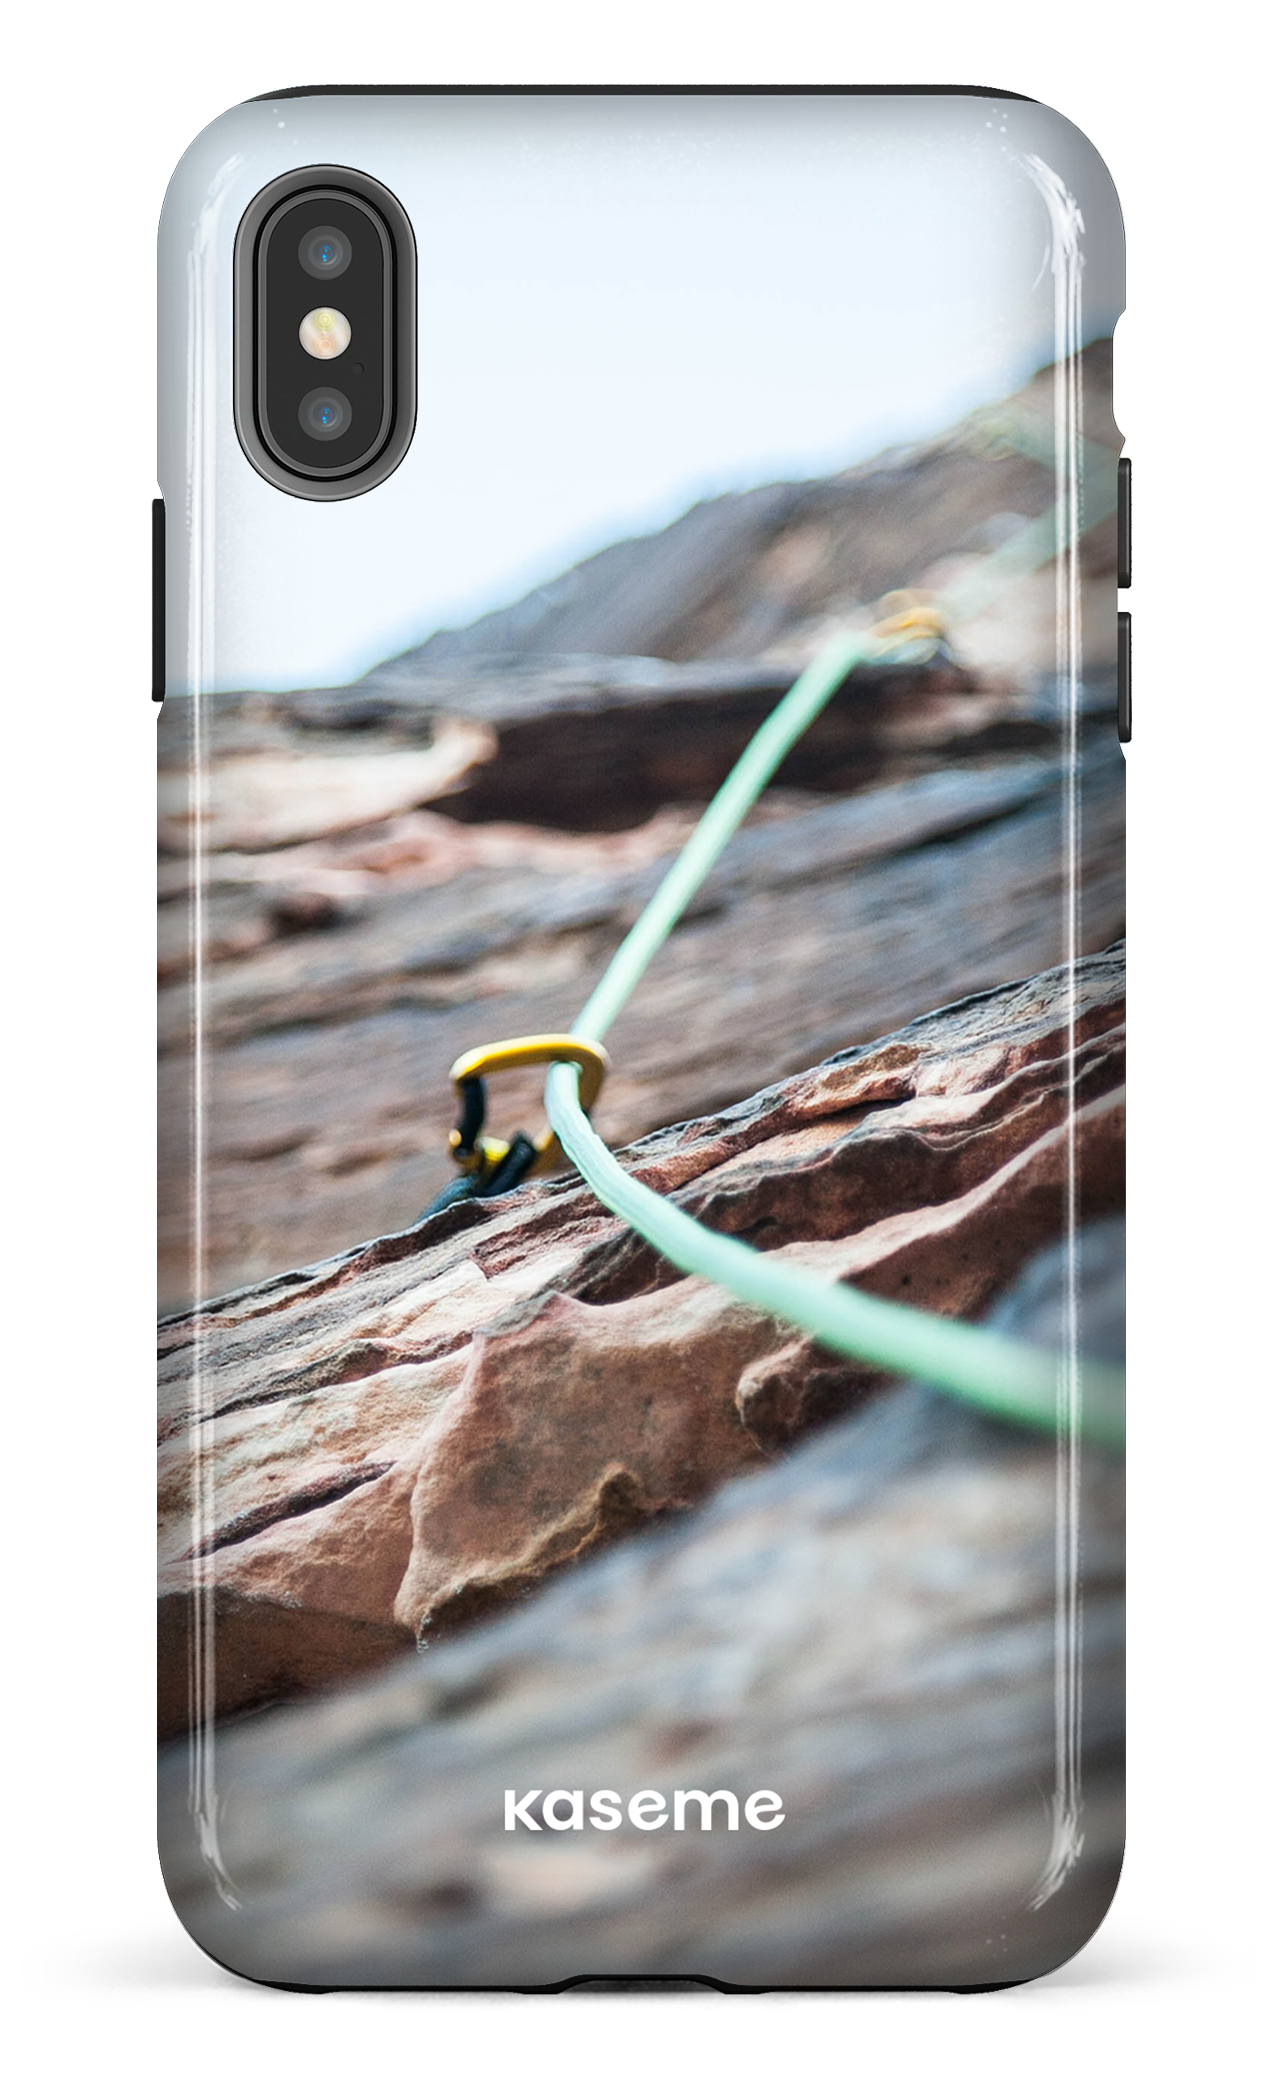 Top rope - iPhone XS Max